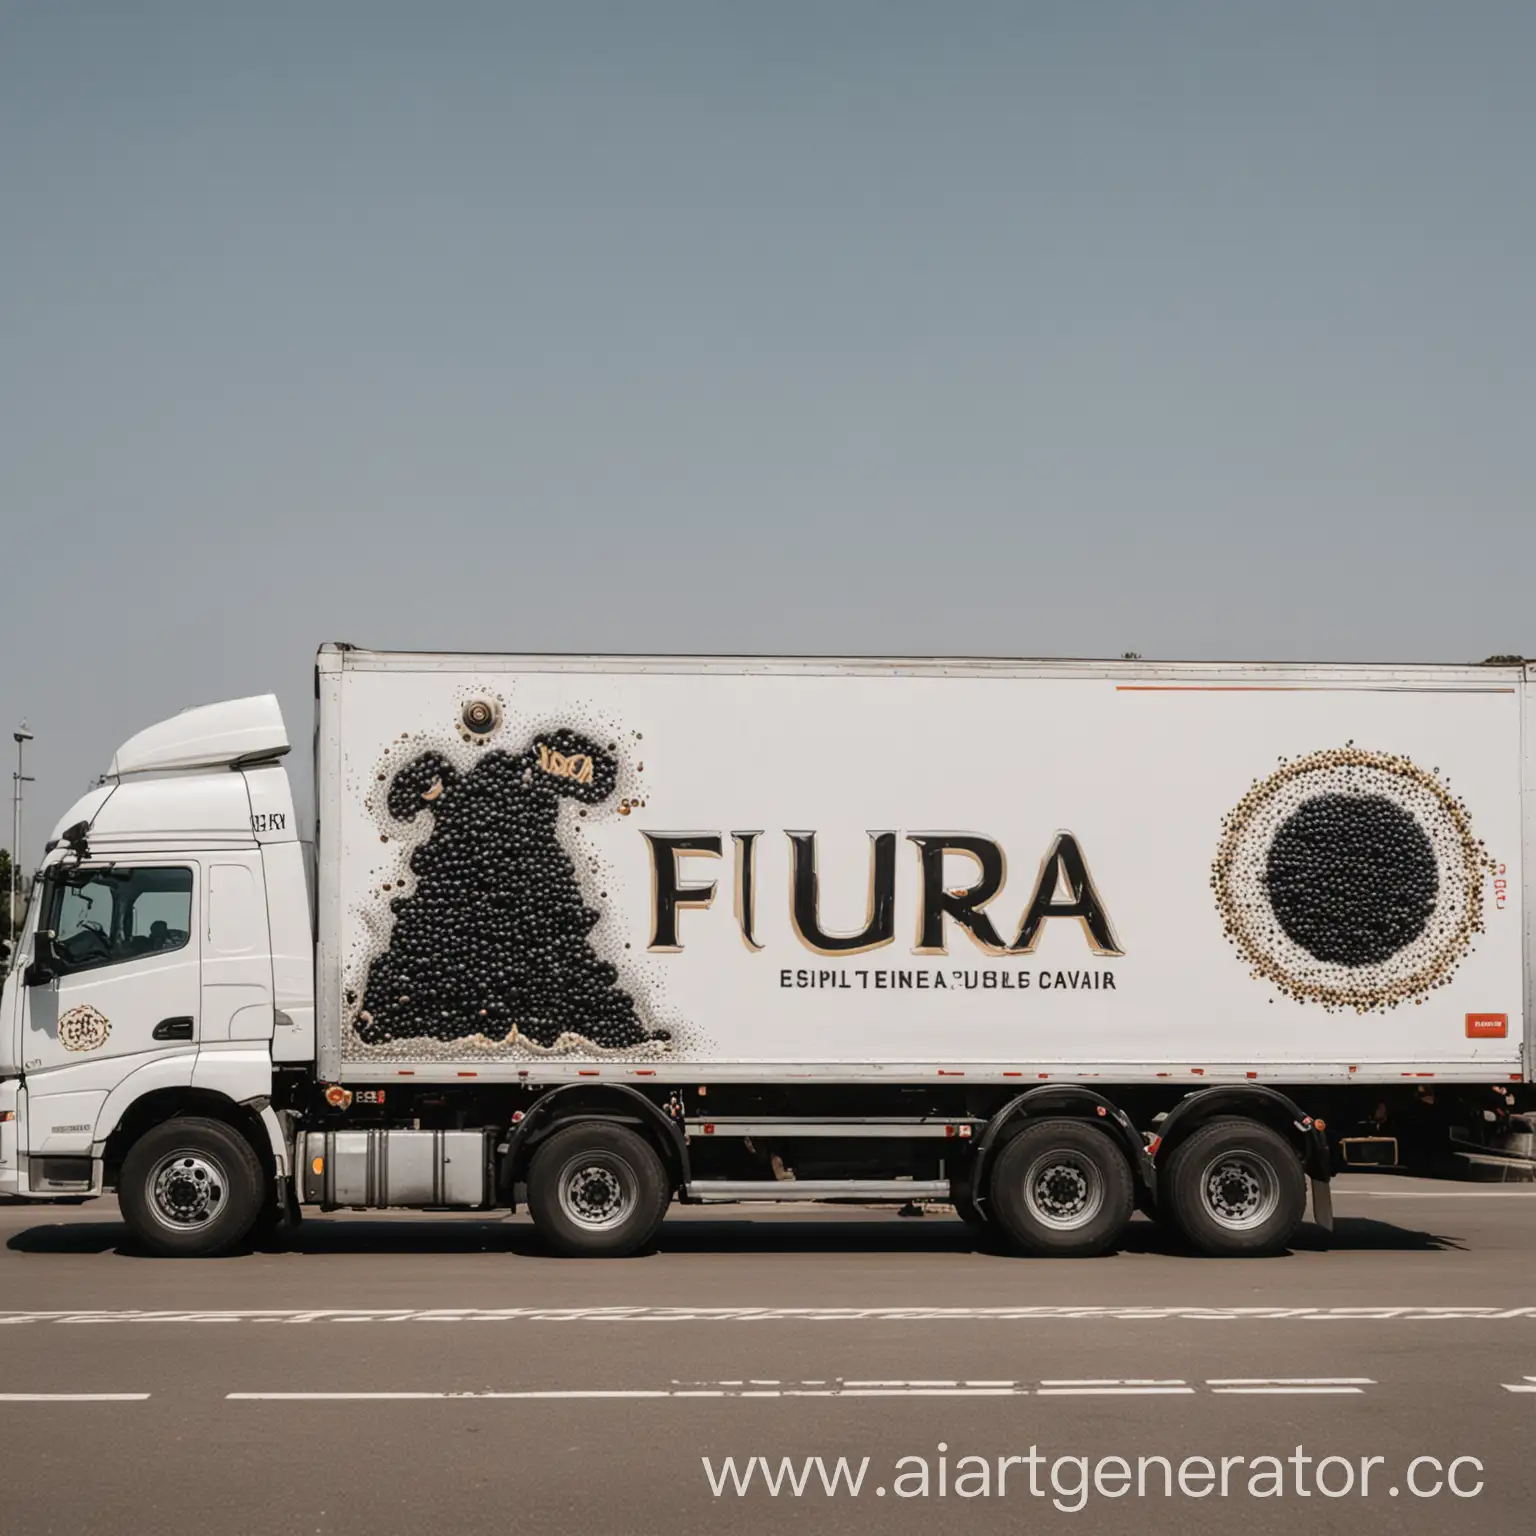 Luxury-Caviar-Companys-Fura-Truck-Advertisement